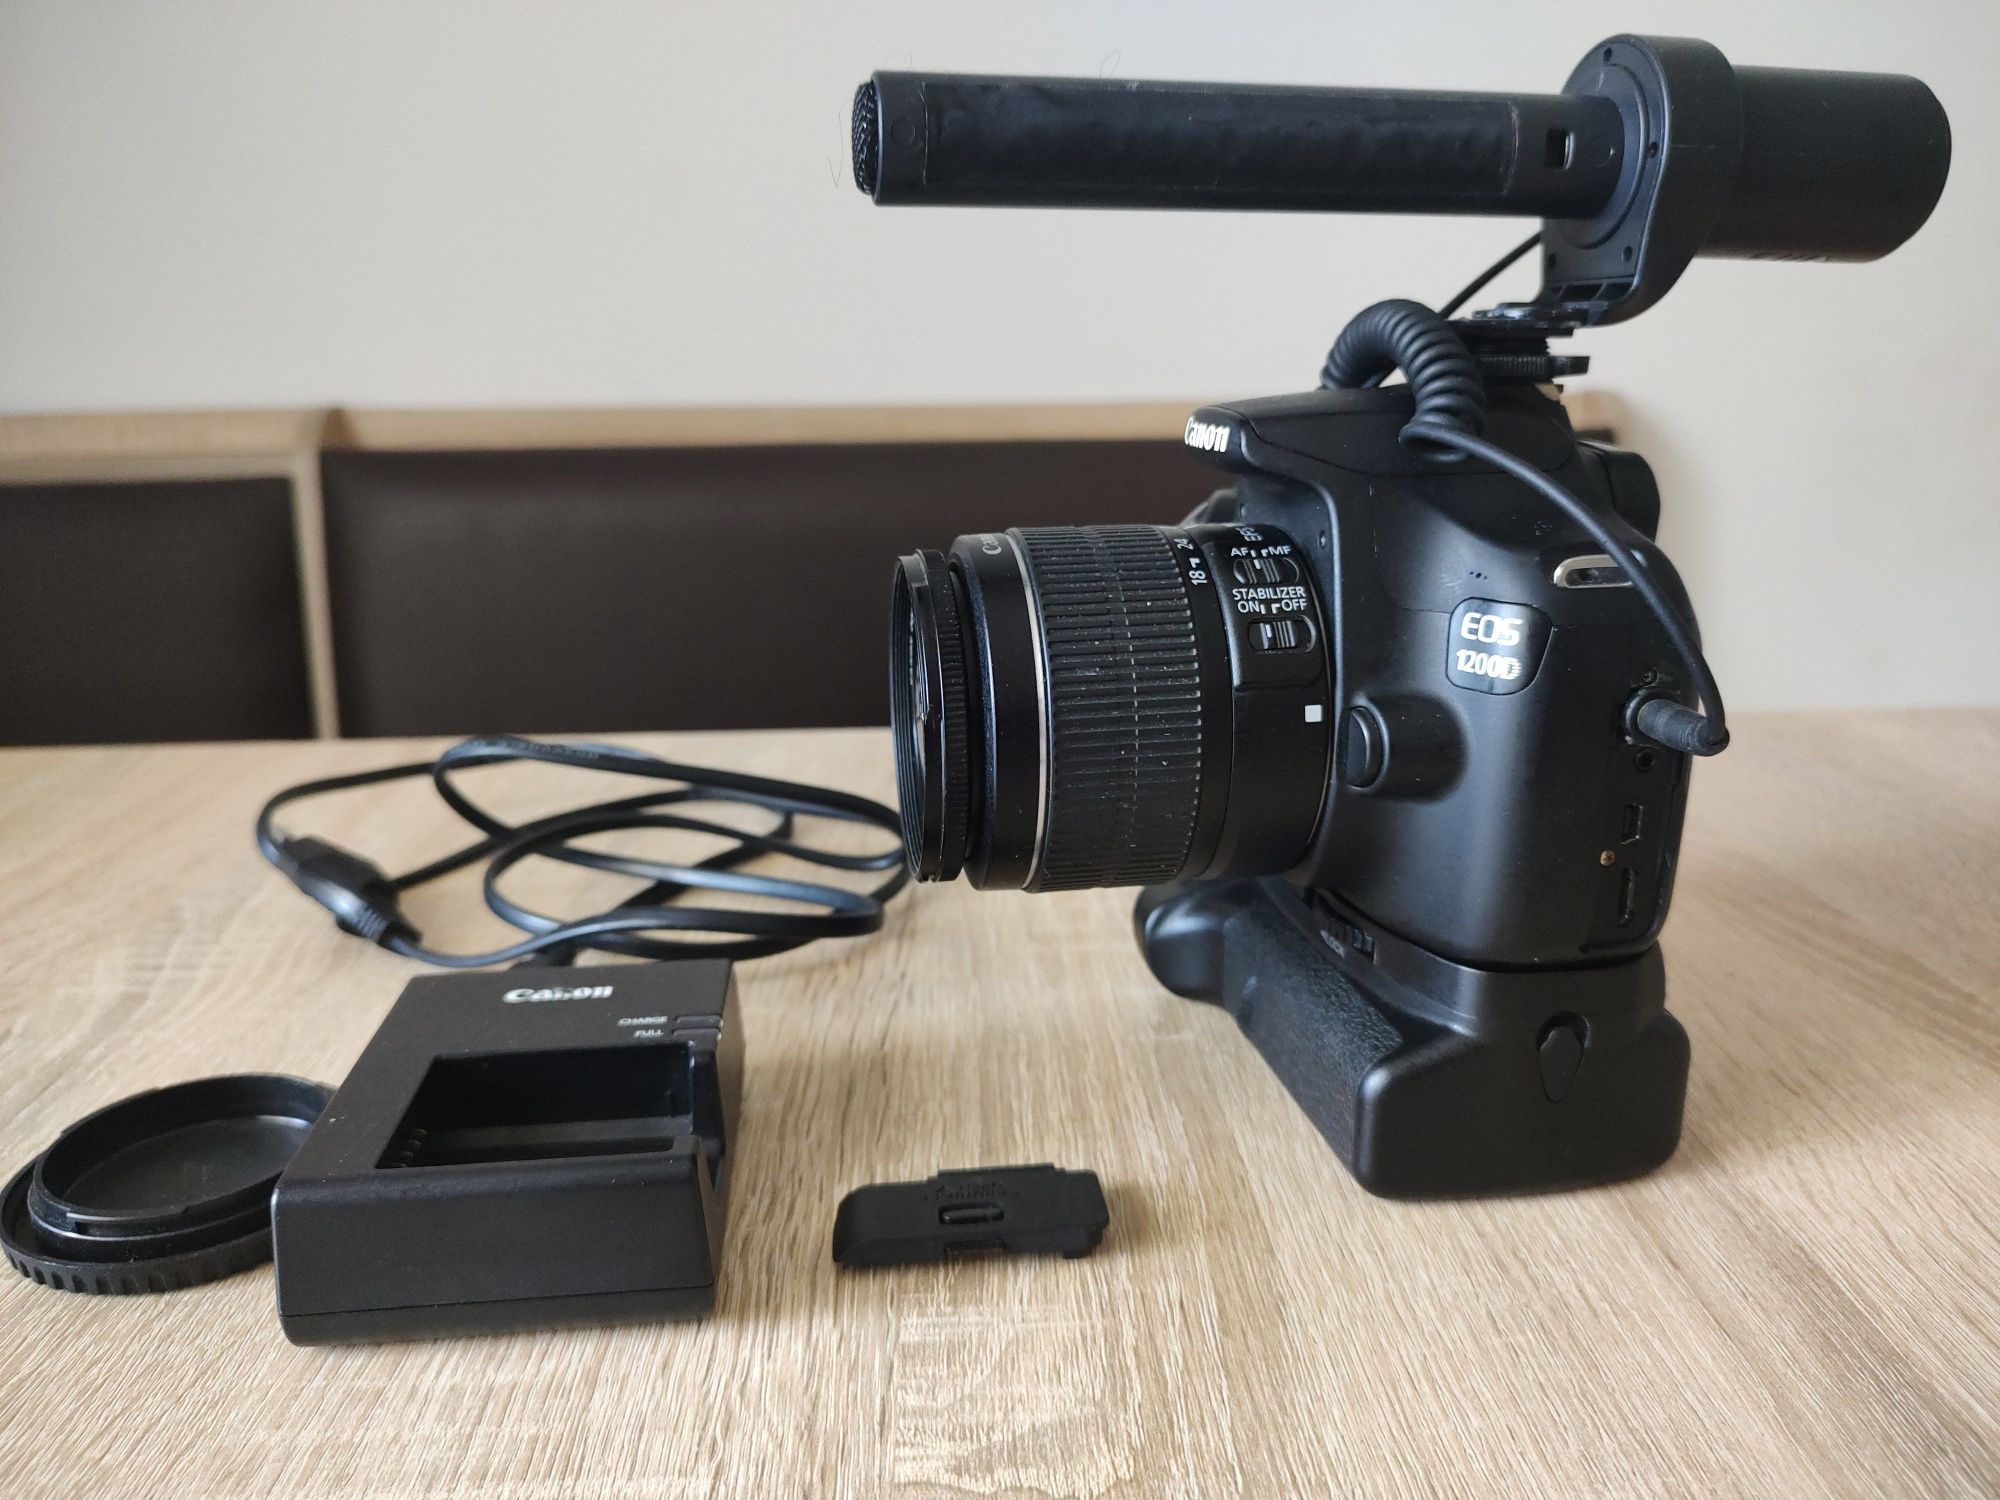 Kit Canon 1200D si obiectiv 18-55mm plus microfon si grip